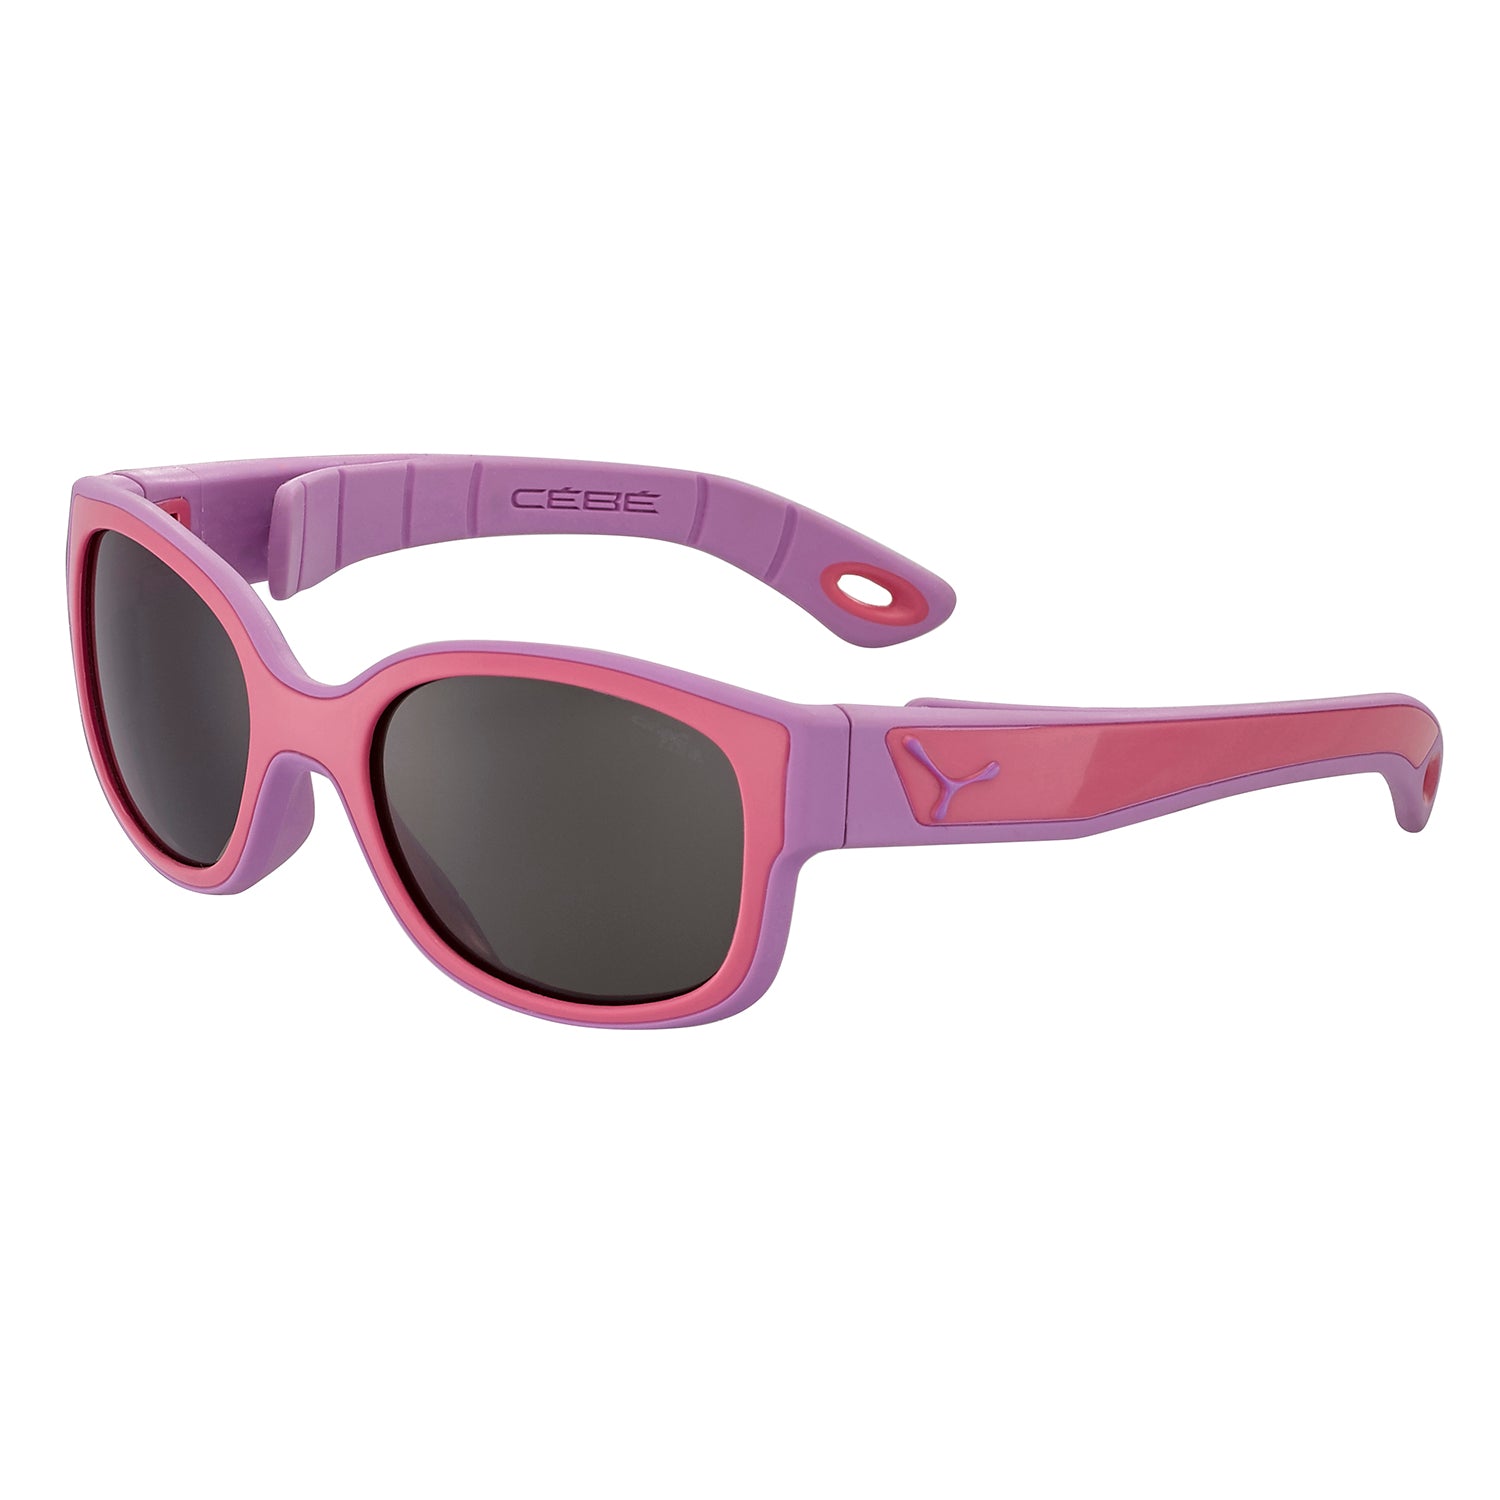 kids sunglasses - Cebe Junior S'PIES CBSPIES2 Sunglasses